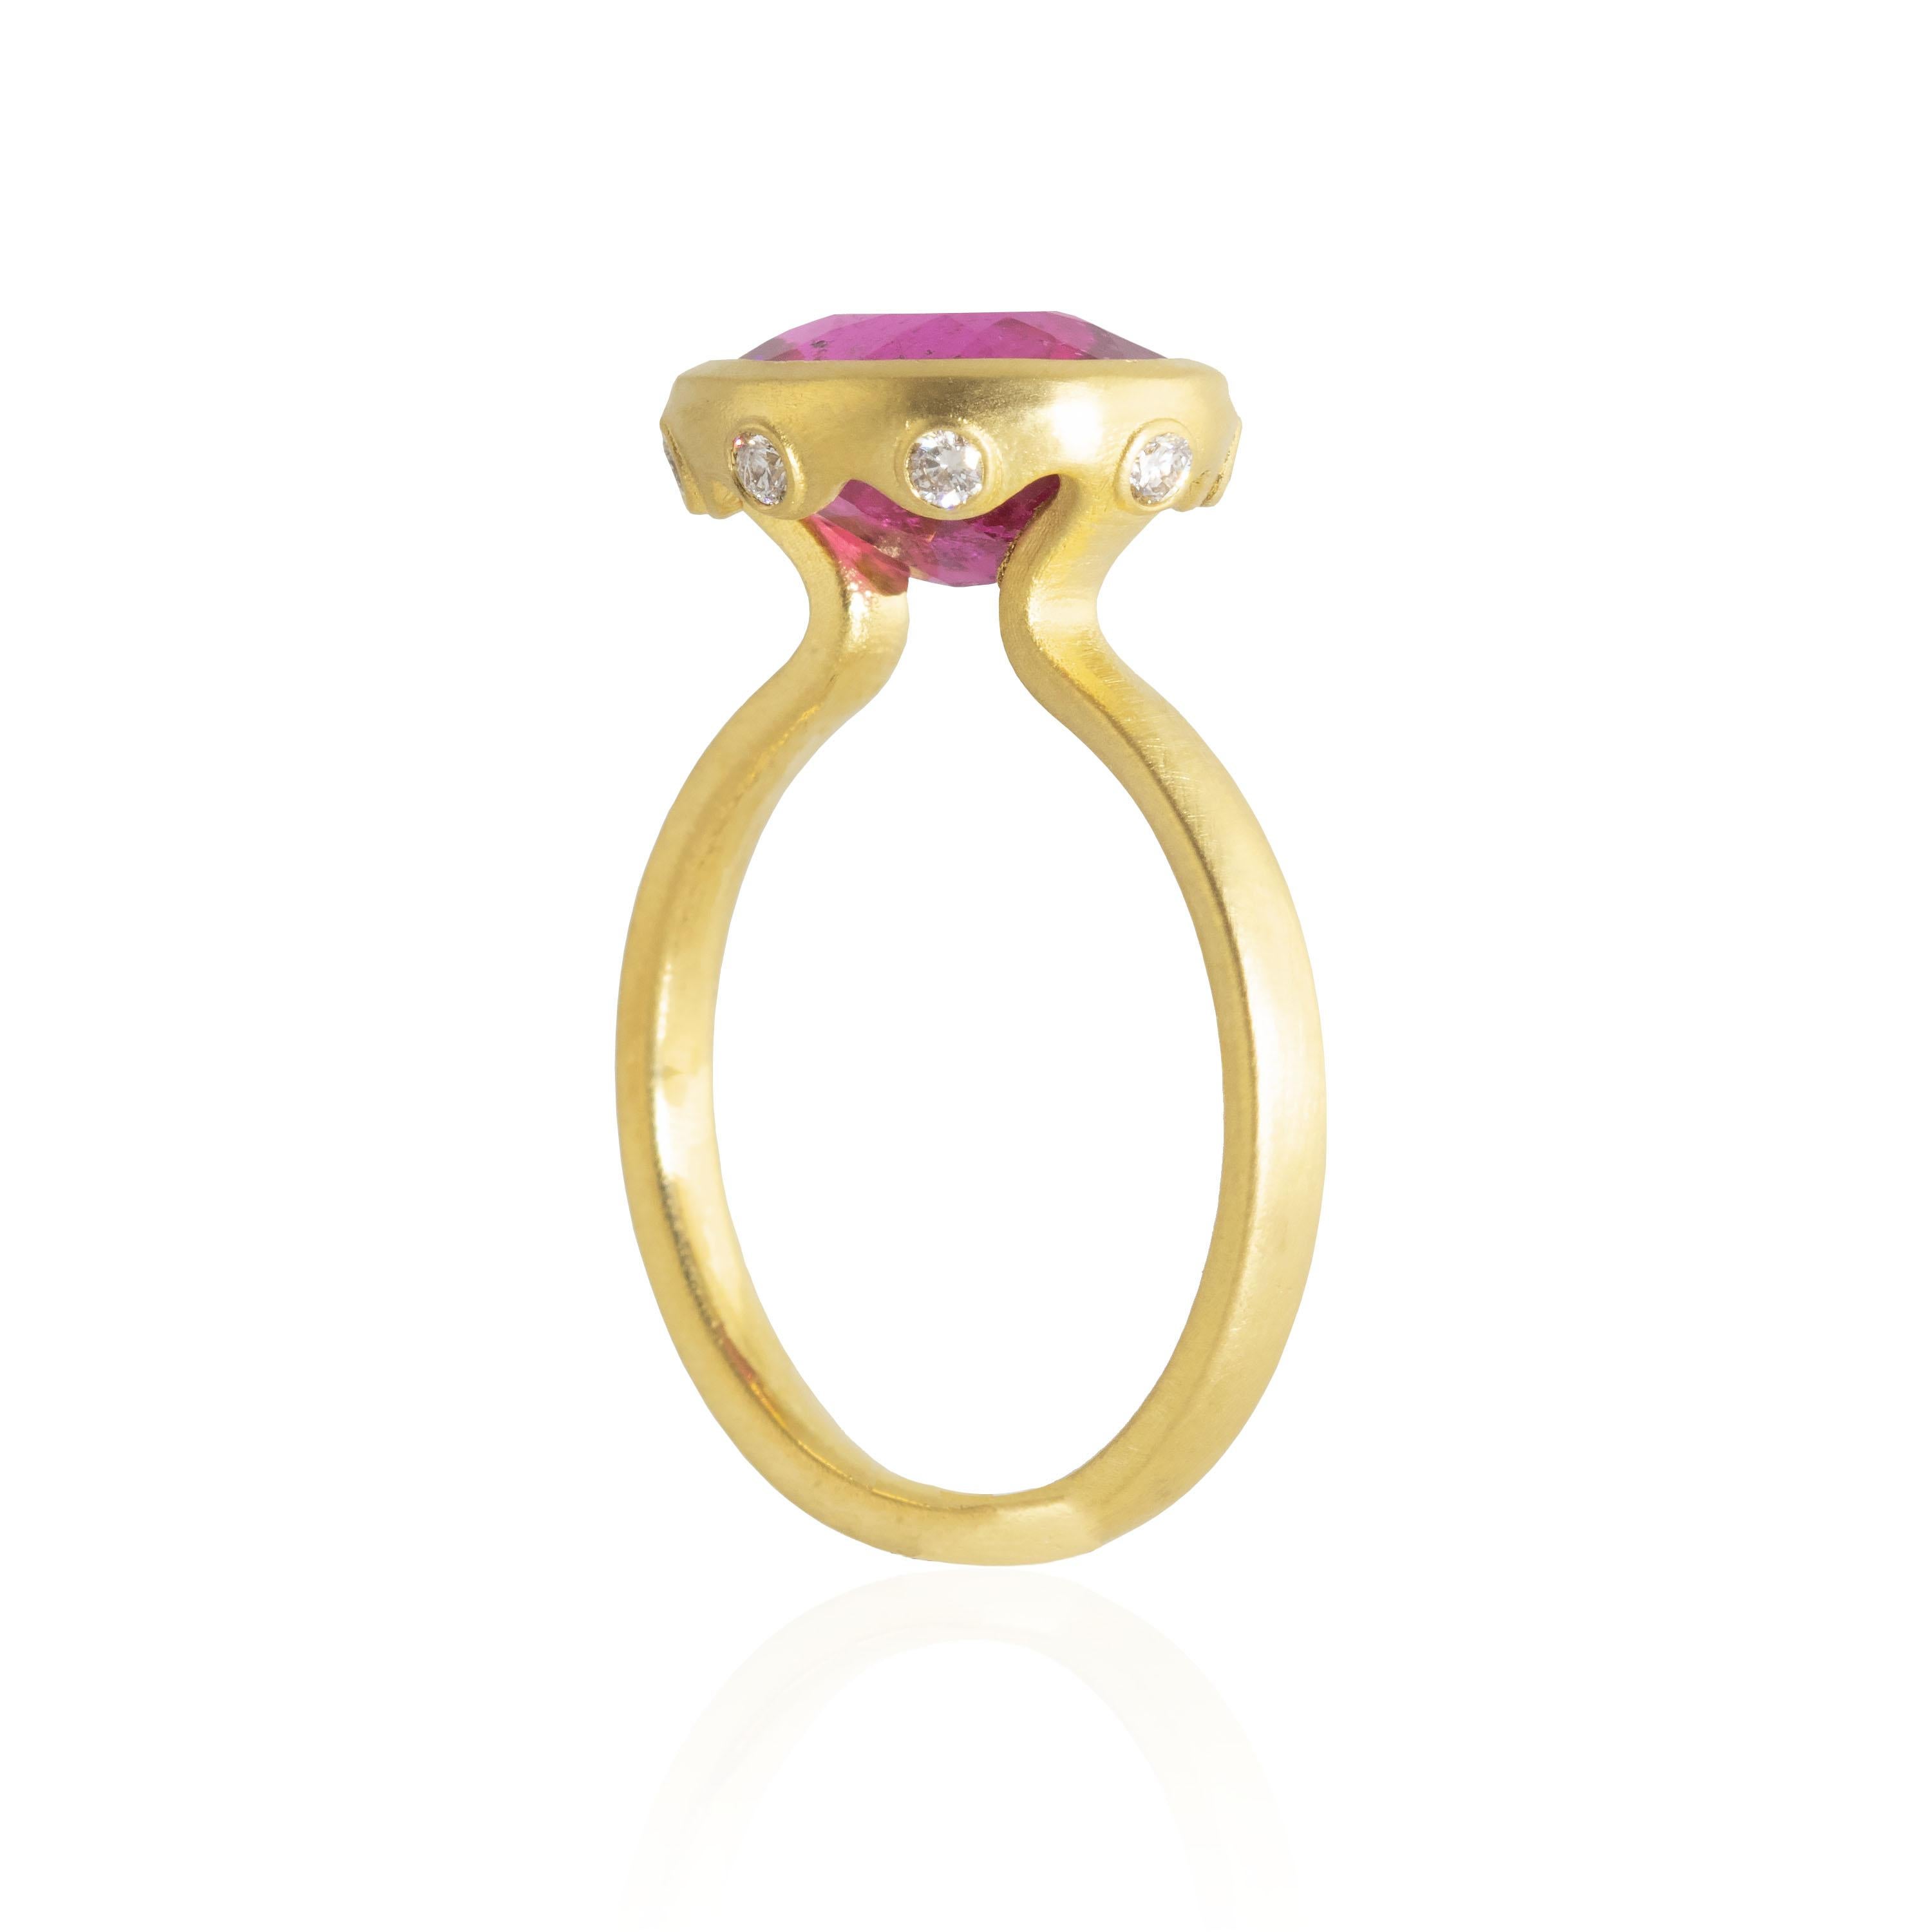 Artisan Ico & the Bird Fine Jewelry 3.84 carat Rubellite Tourmaline Diamond Gold Ring For Sale